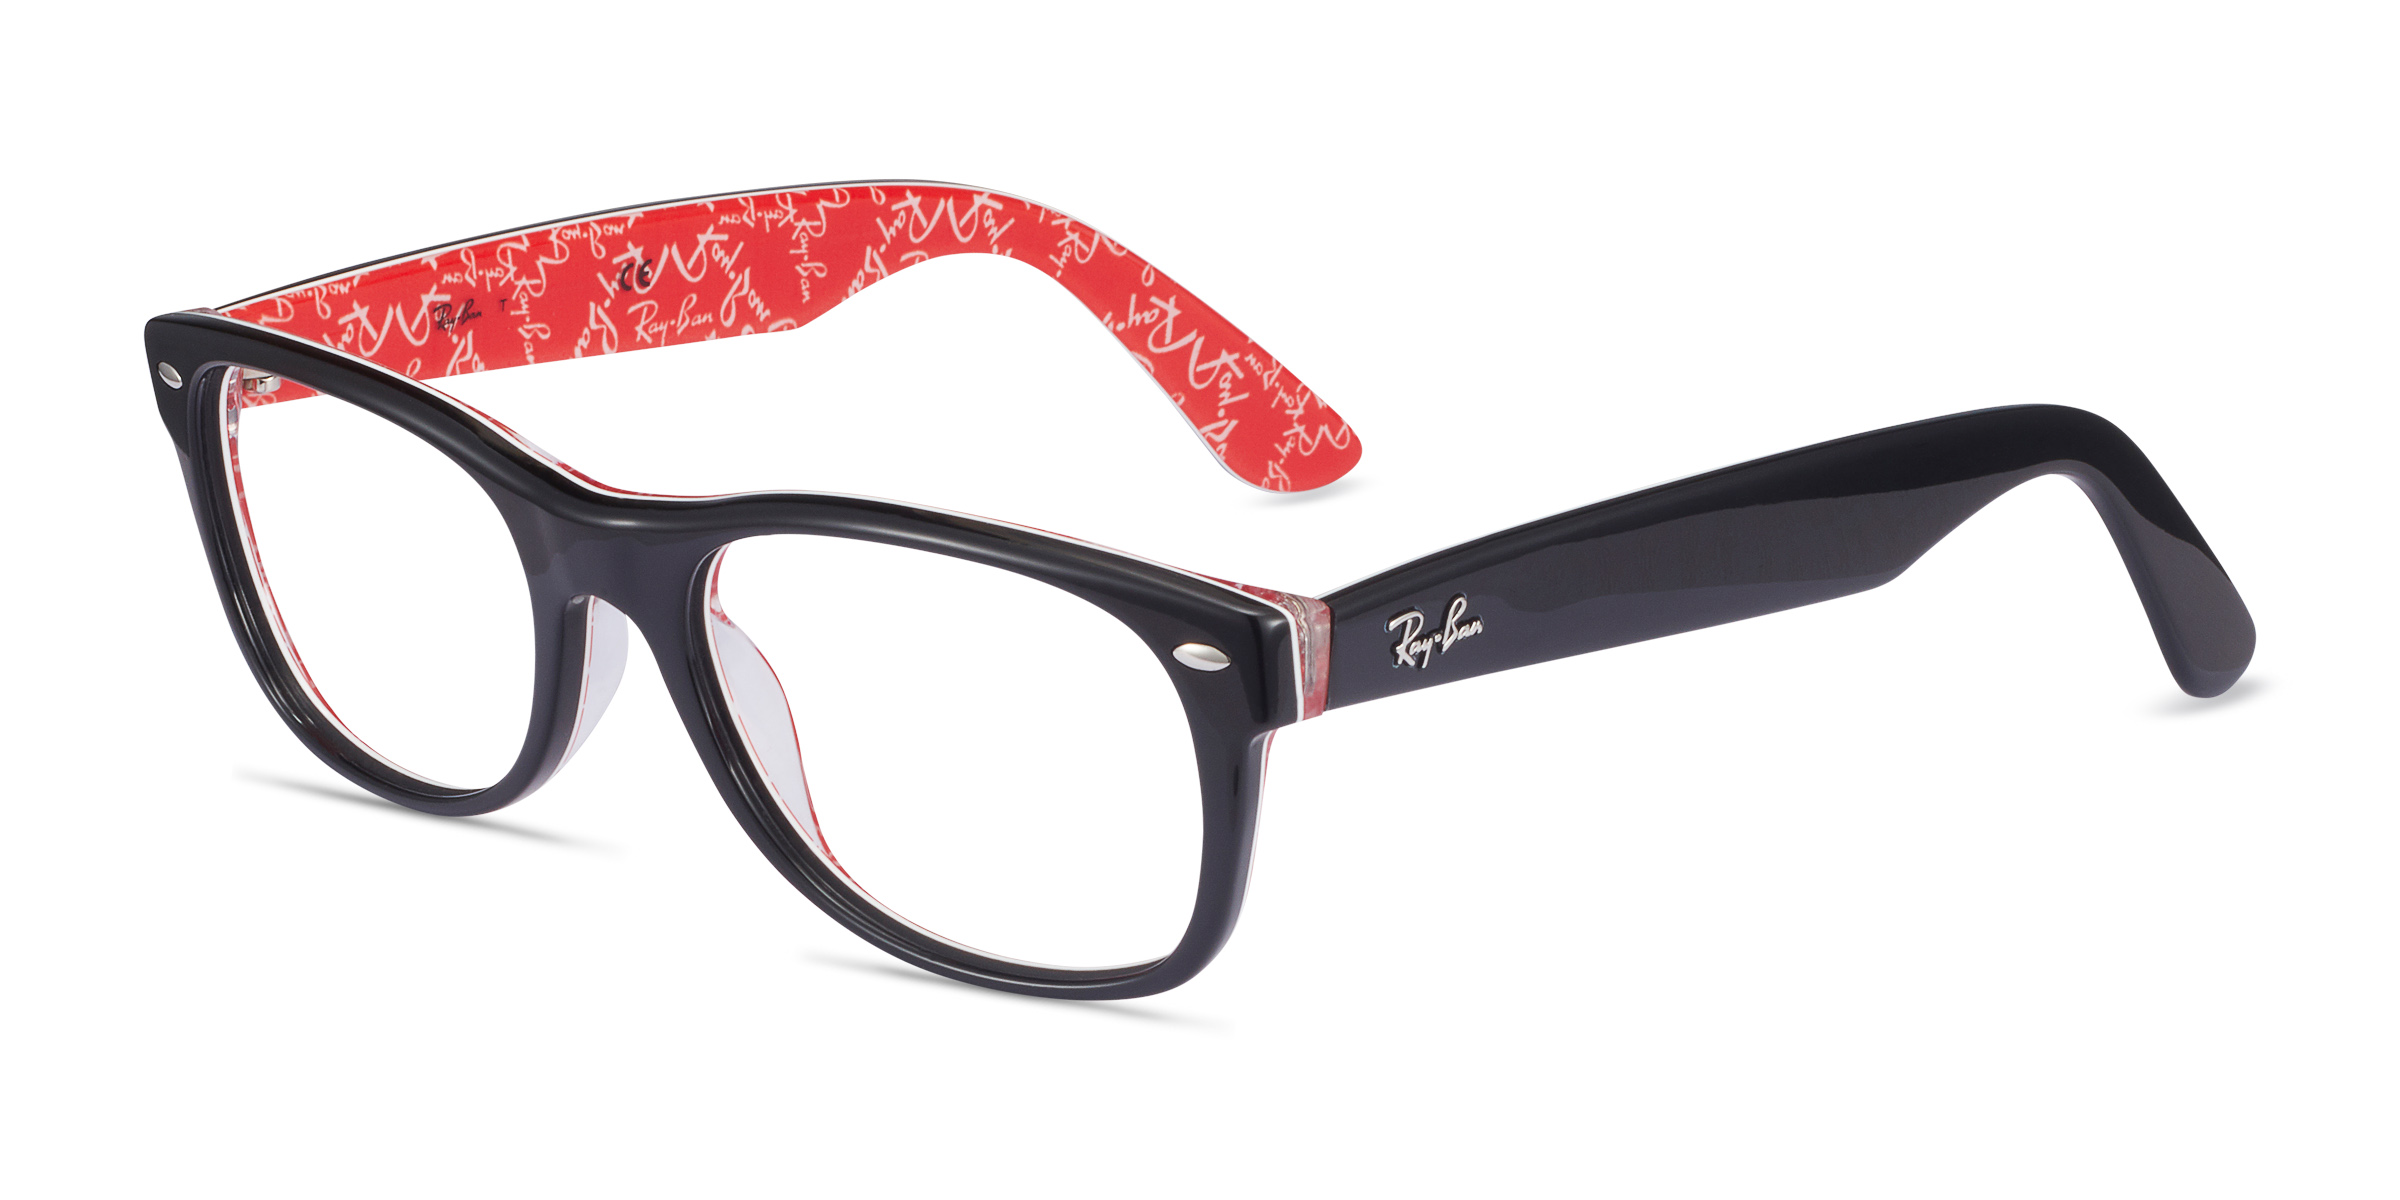 Ray Ban Rb5184 Wayfarer Square Black And Red Frame Eyeglasses